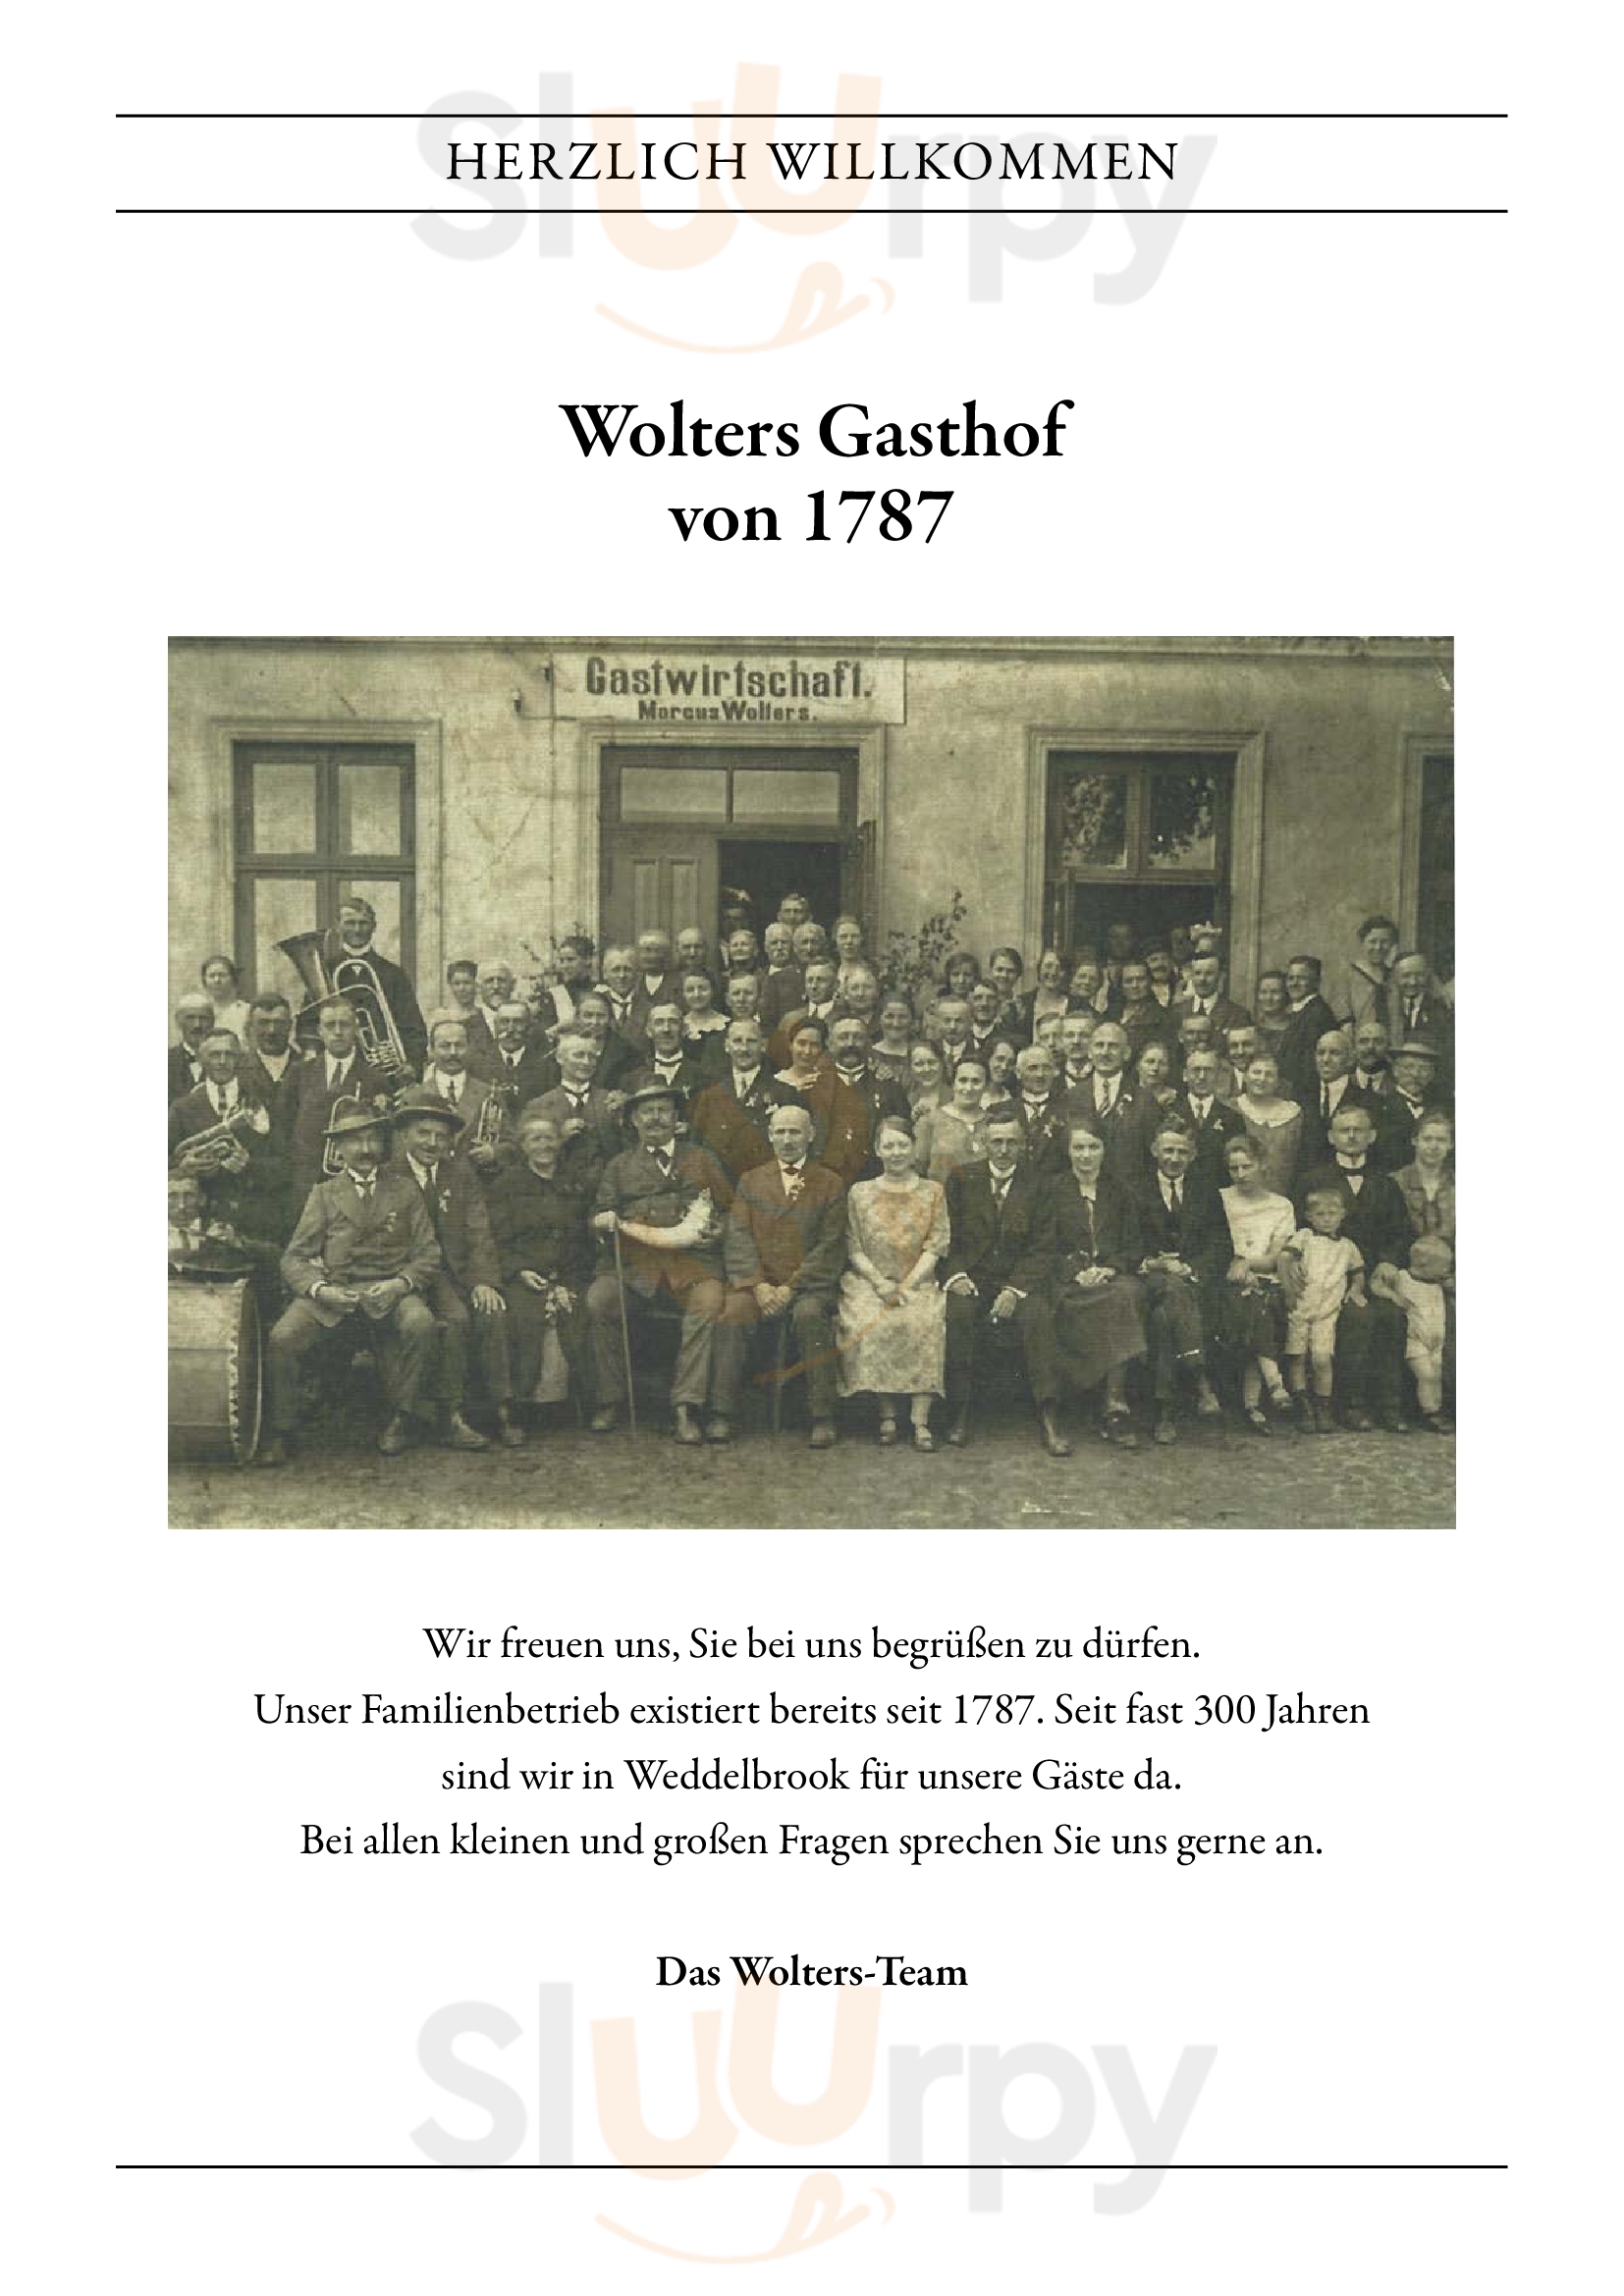 Wolters Gasthof Weddelbrook Menu - 1